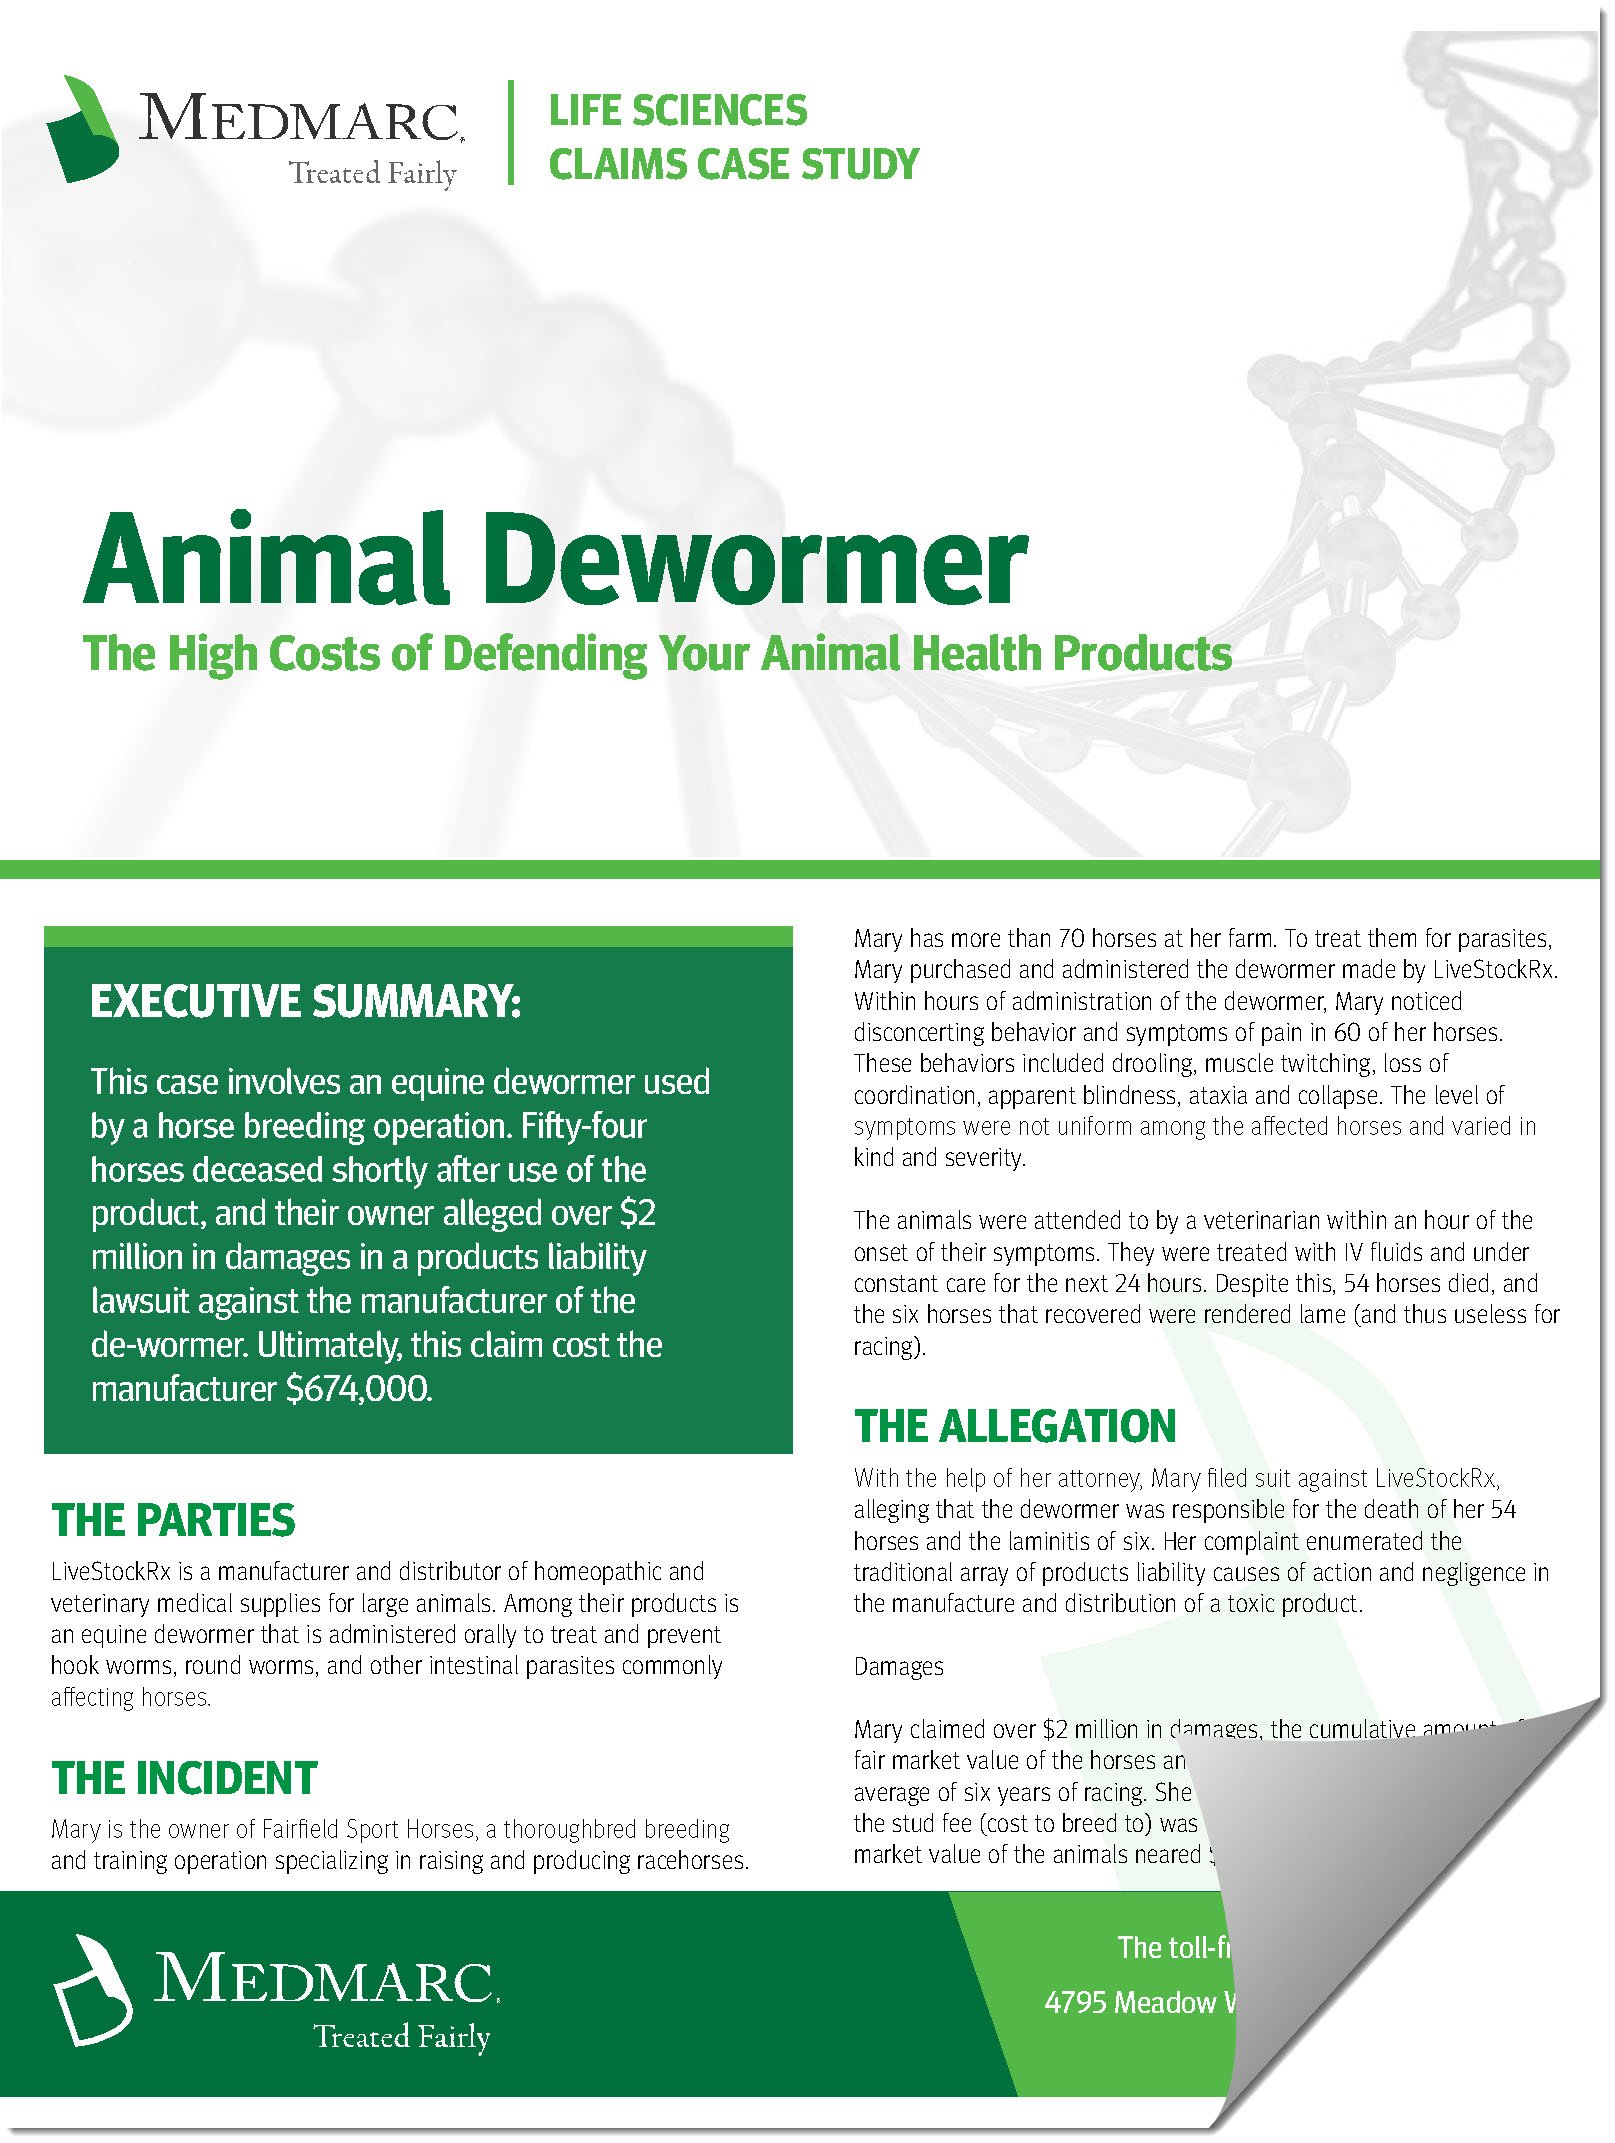 Animal Health Dewormer Case Study